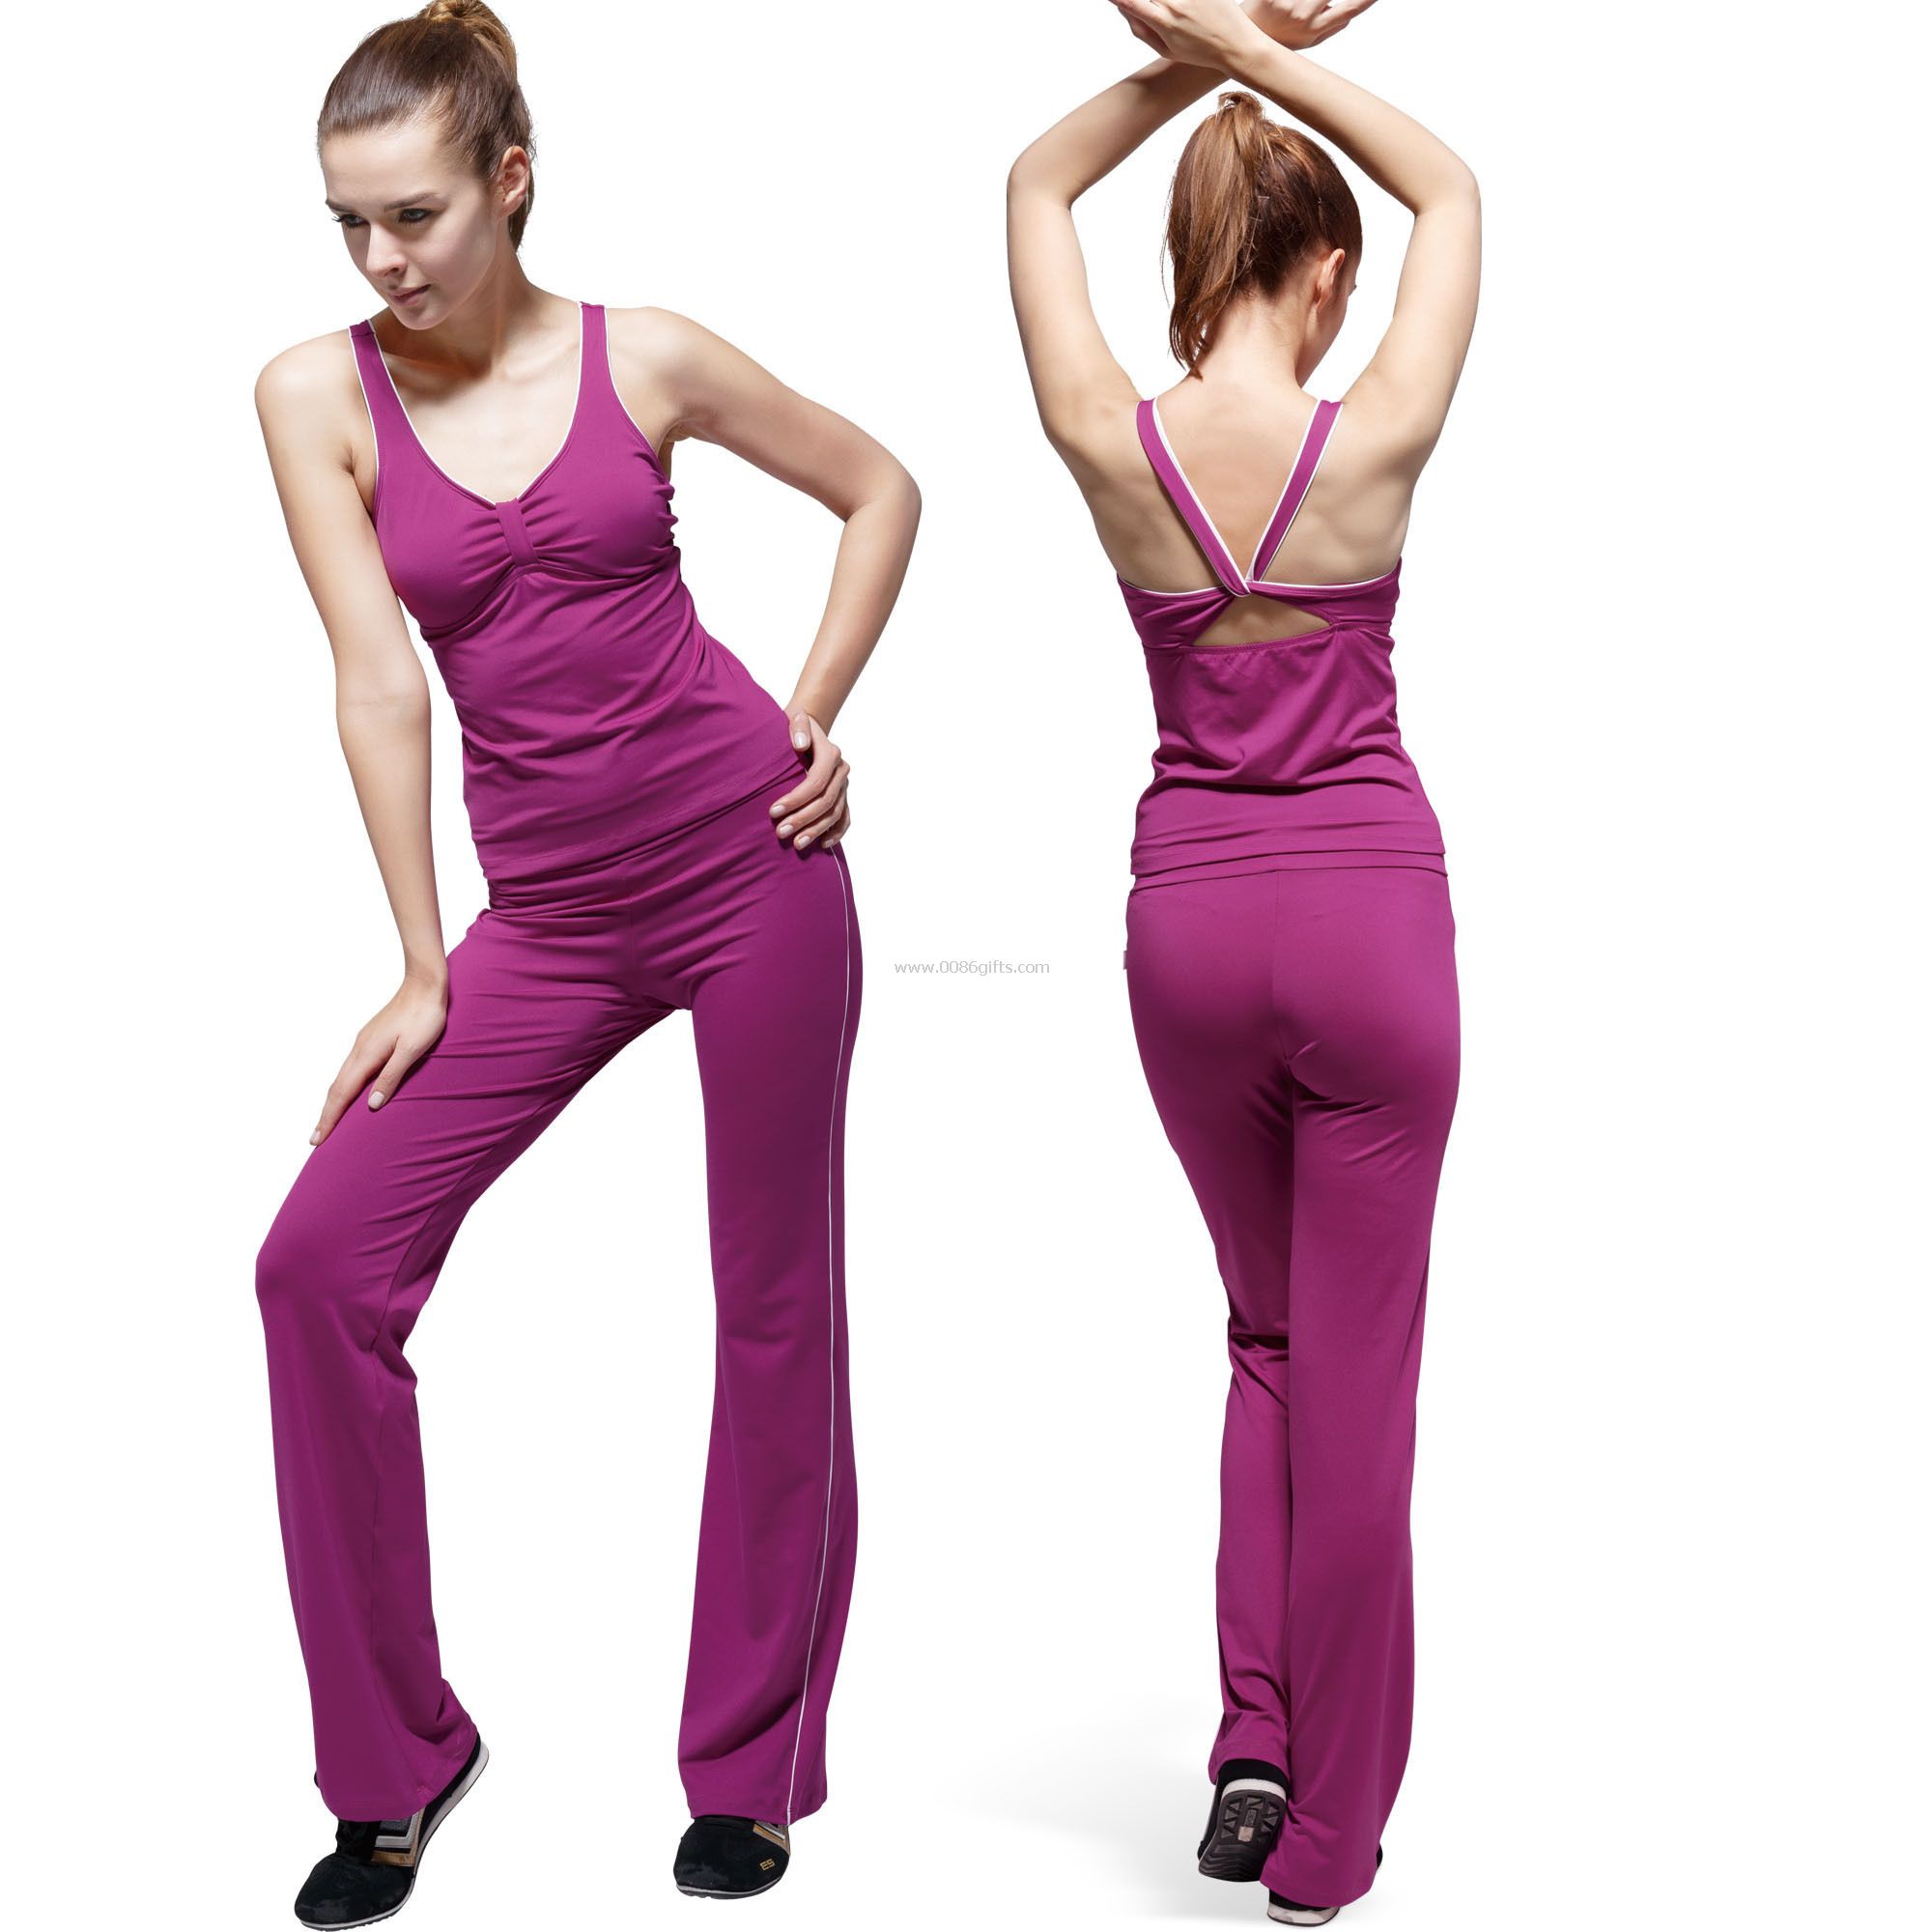 Spandex / pamuk Womens Fitness Giyim sıkı derin v yaka tasarımı ile nefes